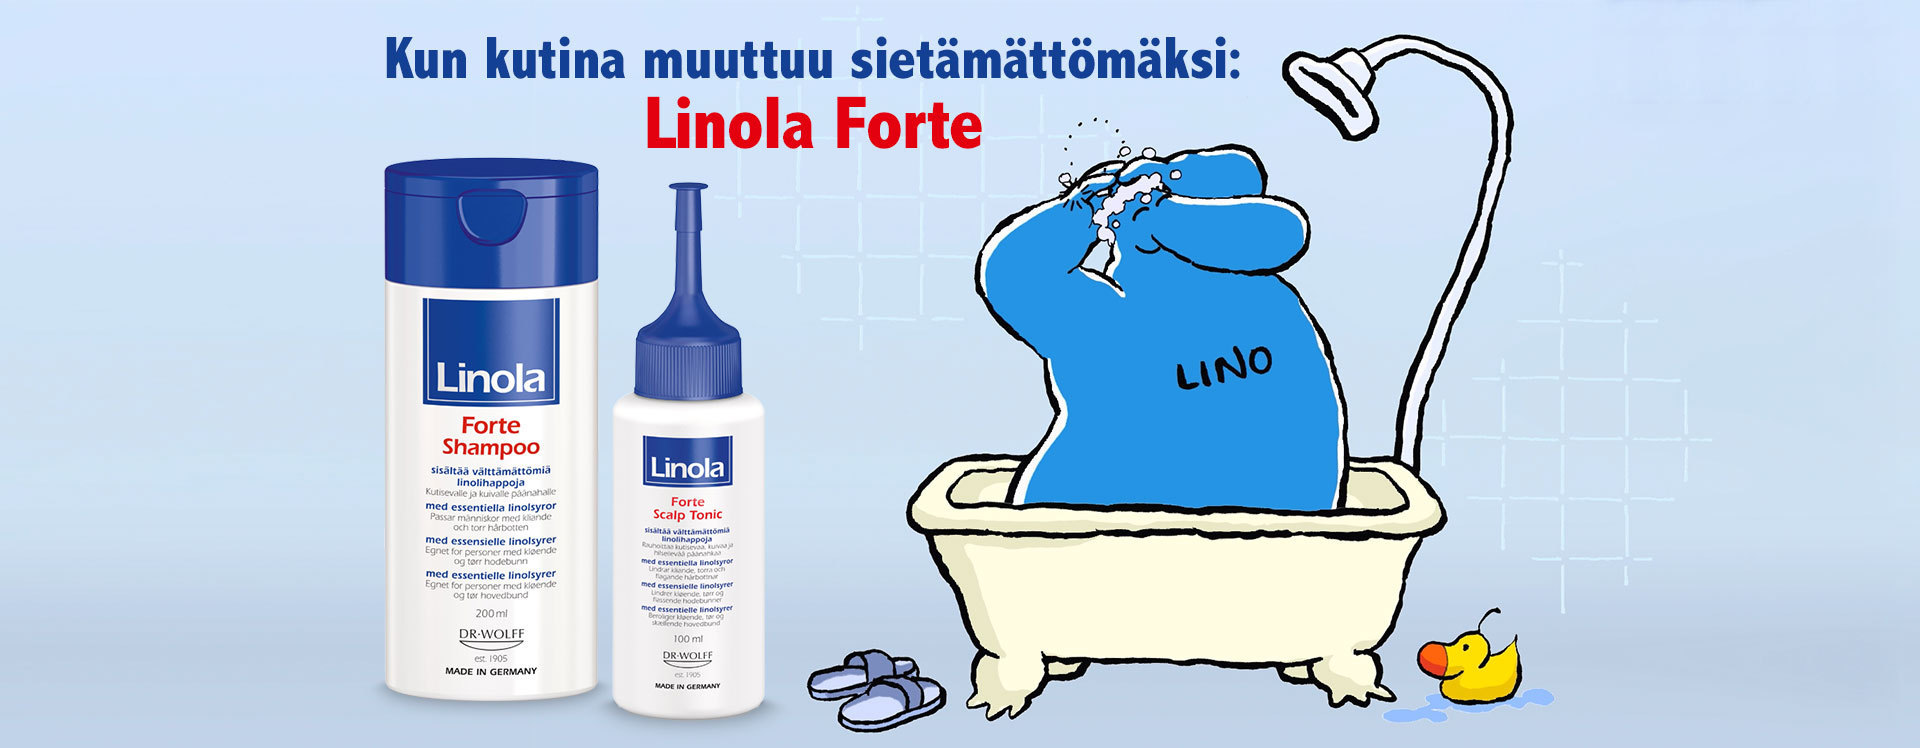 Linola –shampoo ja Hoitoliuos hiuspohjalle